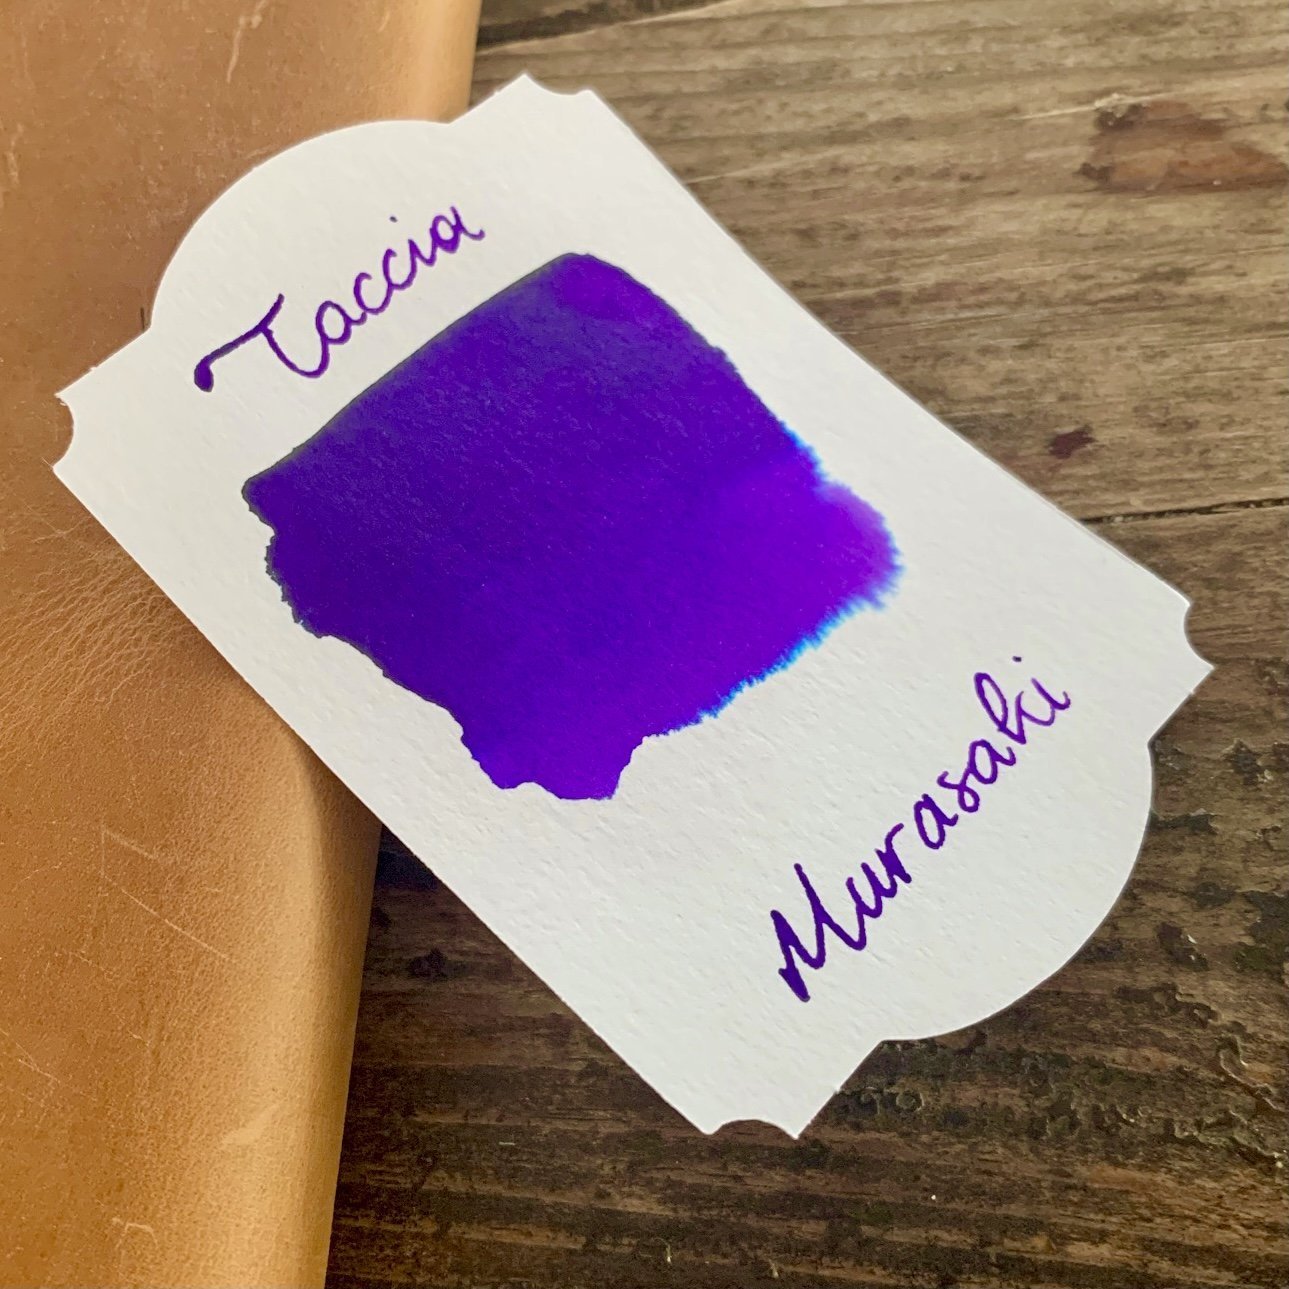 Taccia Murasaki Purple Ink